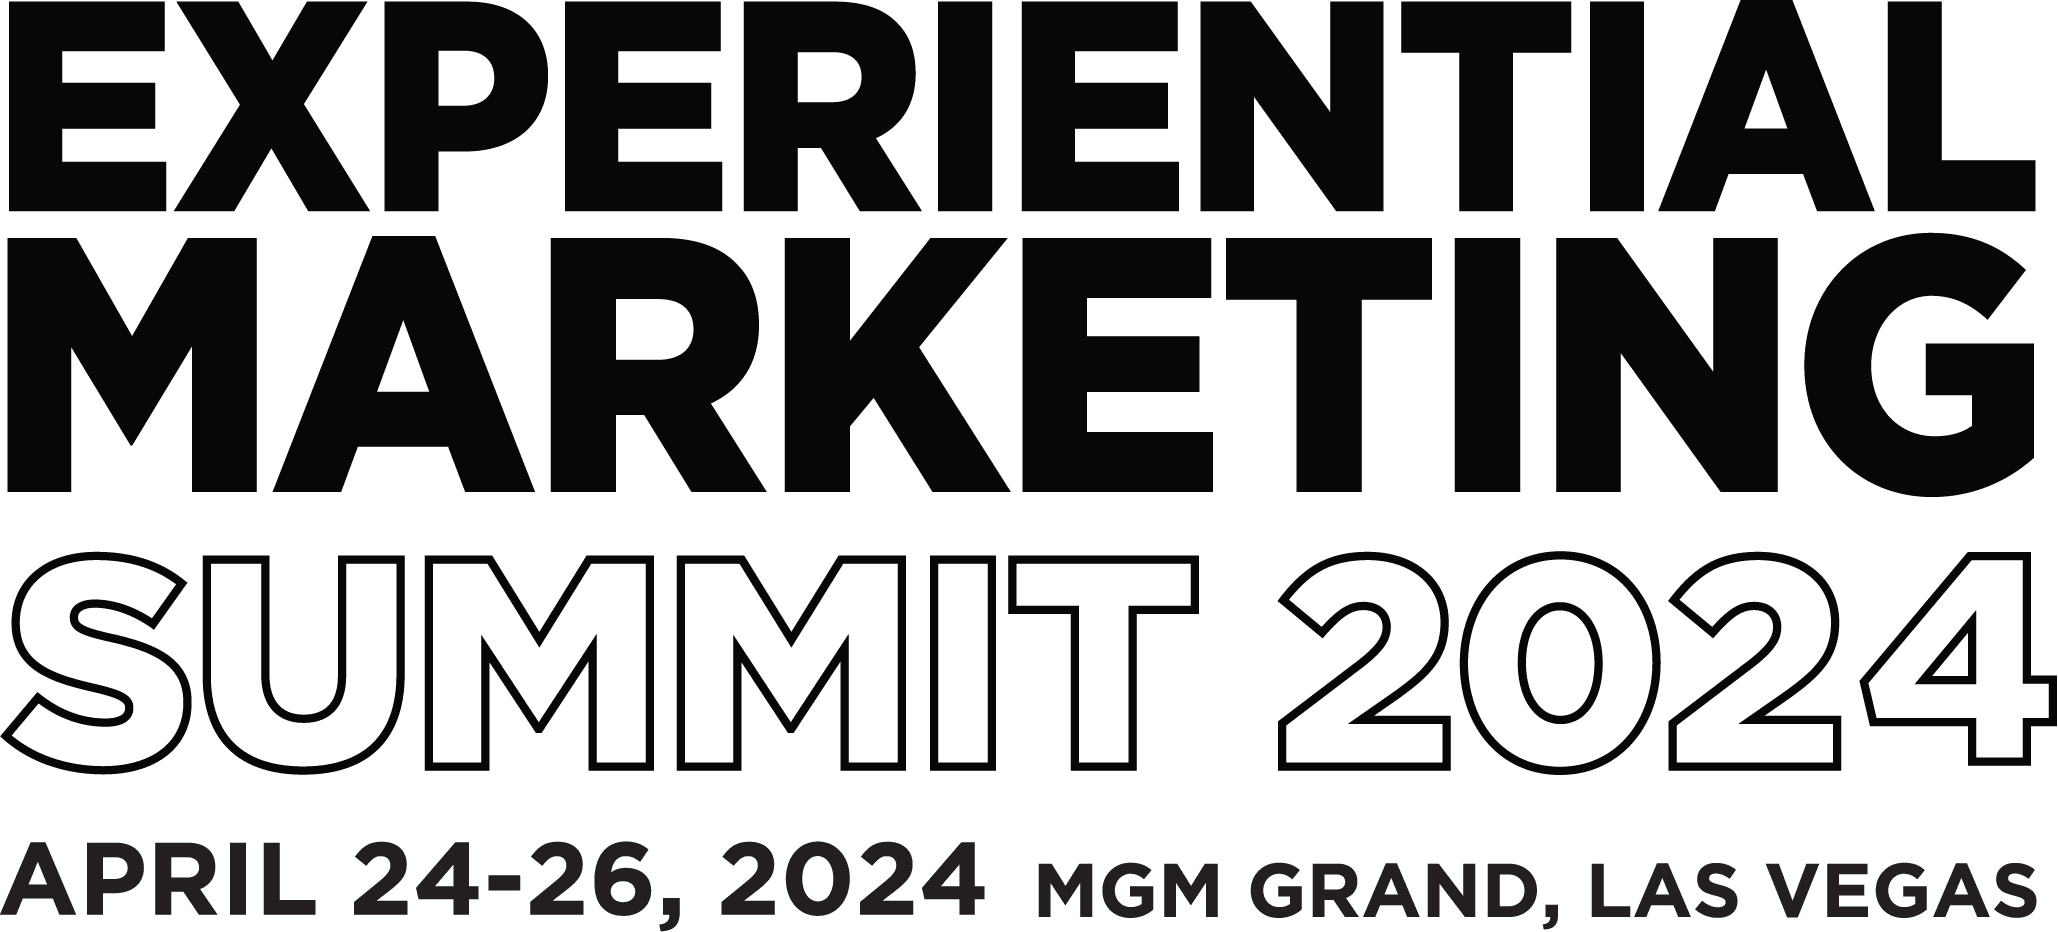 Experiential Marketing Summit 2024 Event Marketer